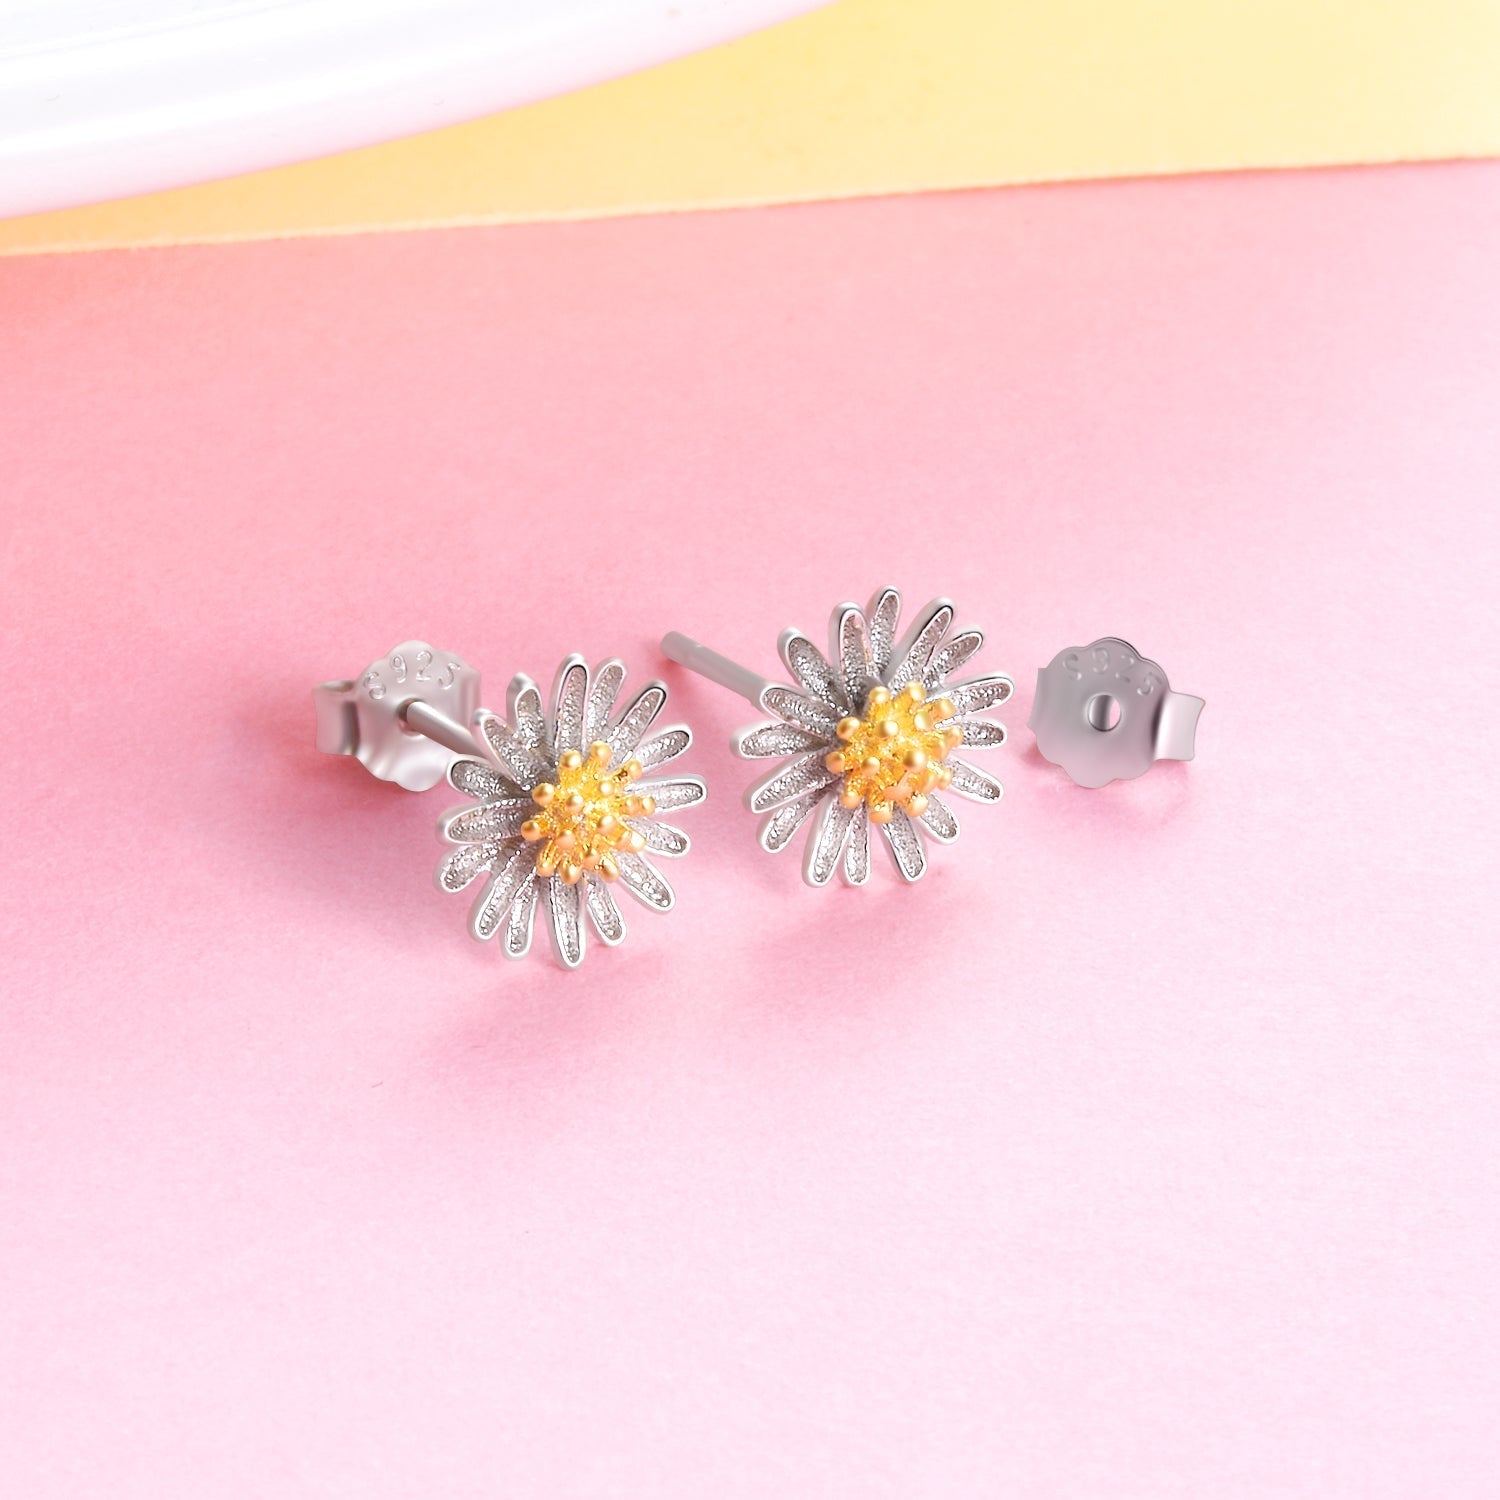 Solid Sterling Silver Sunflower Earrings - Tuesday Morning-Stud Earrings